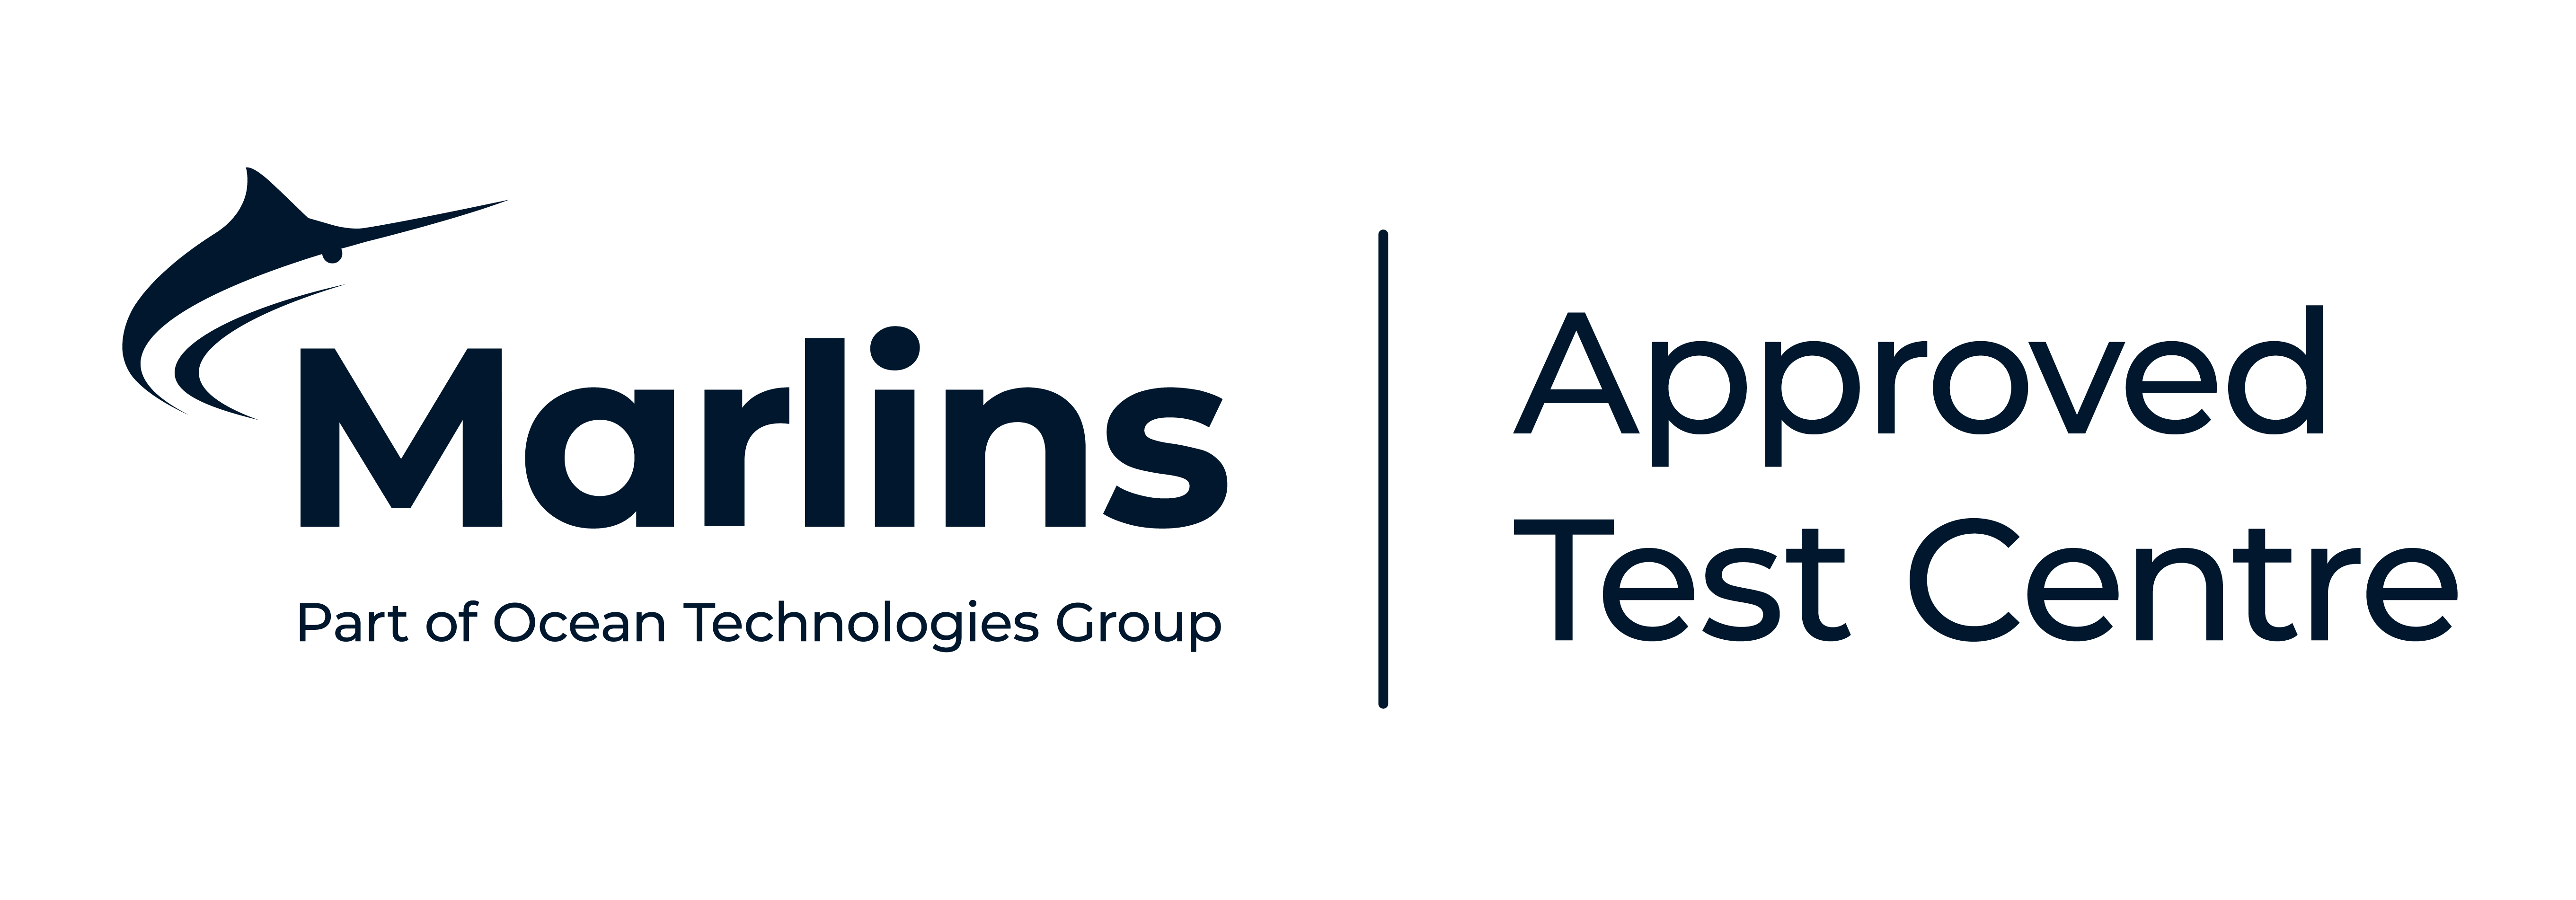 Marlins Approved Test Centre logo